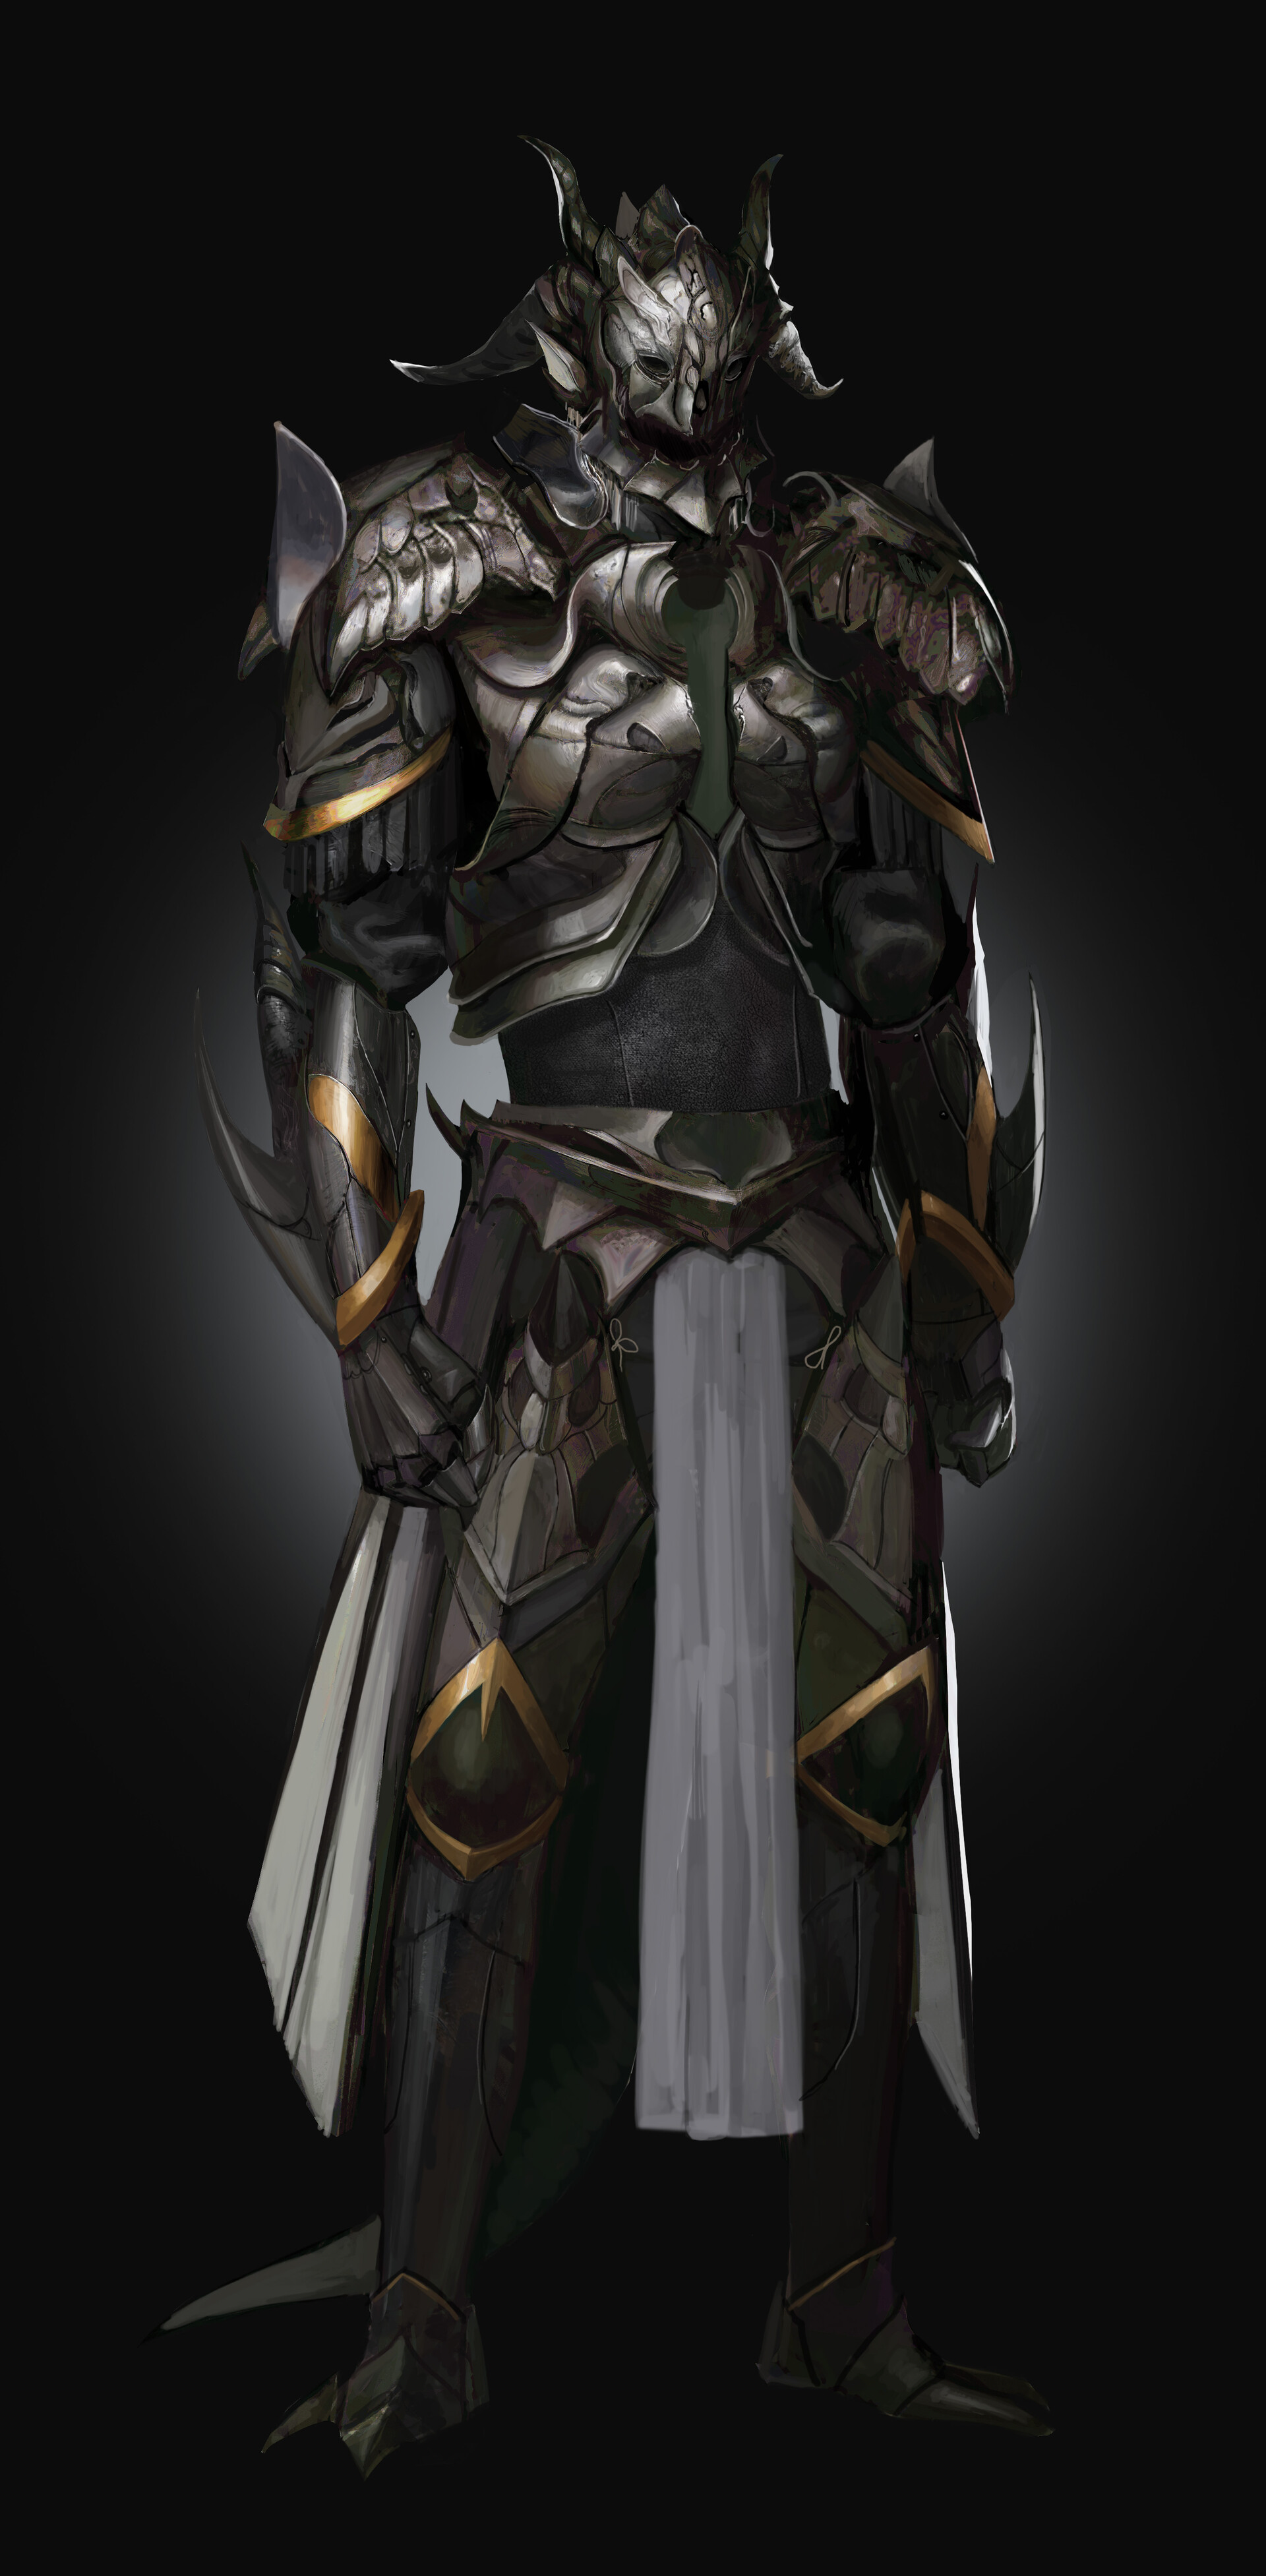 ArtStation - Dragon armor